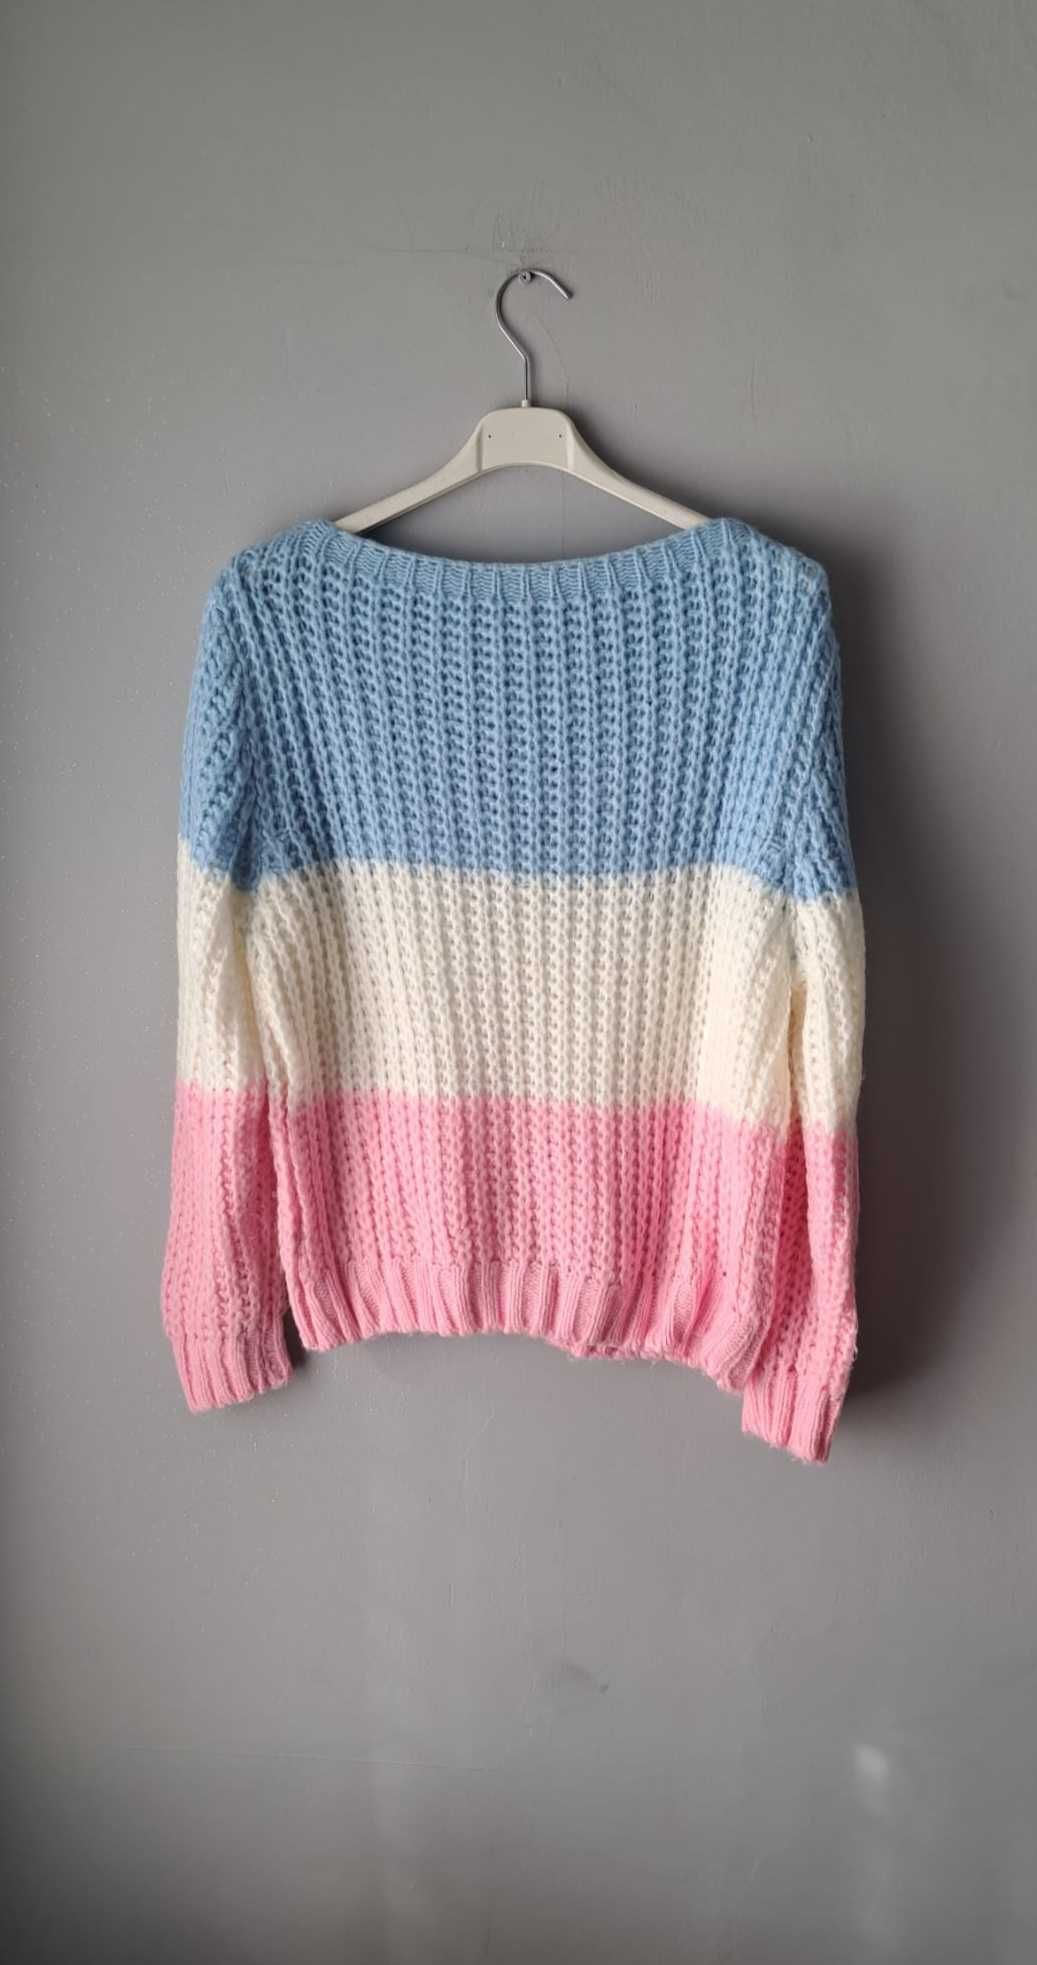 Kolorowy sweterek paski